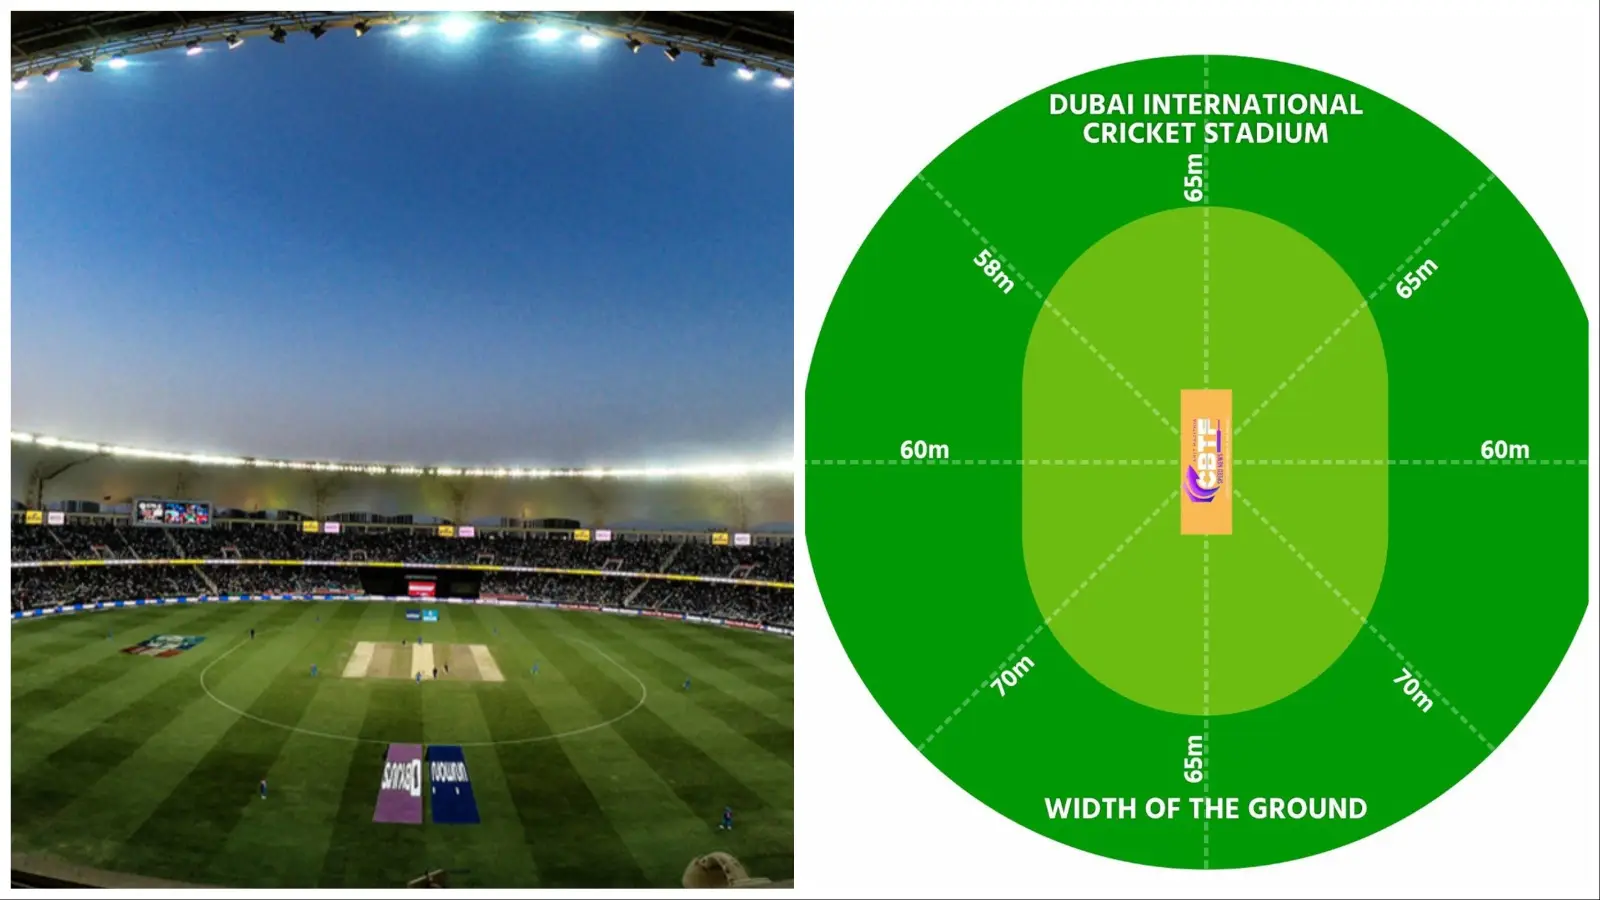 Dubai International Cricket Stadium Boundary Length and Seating Capacity